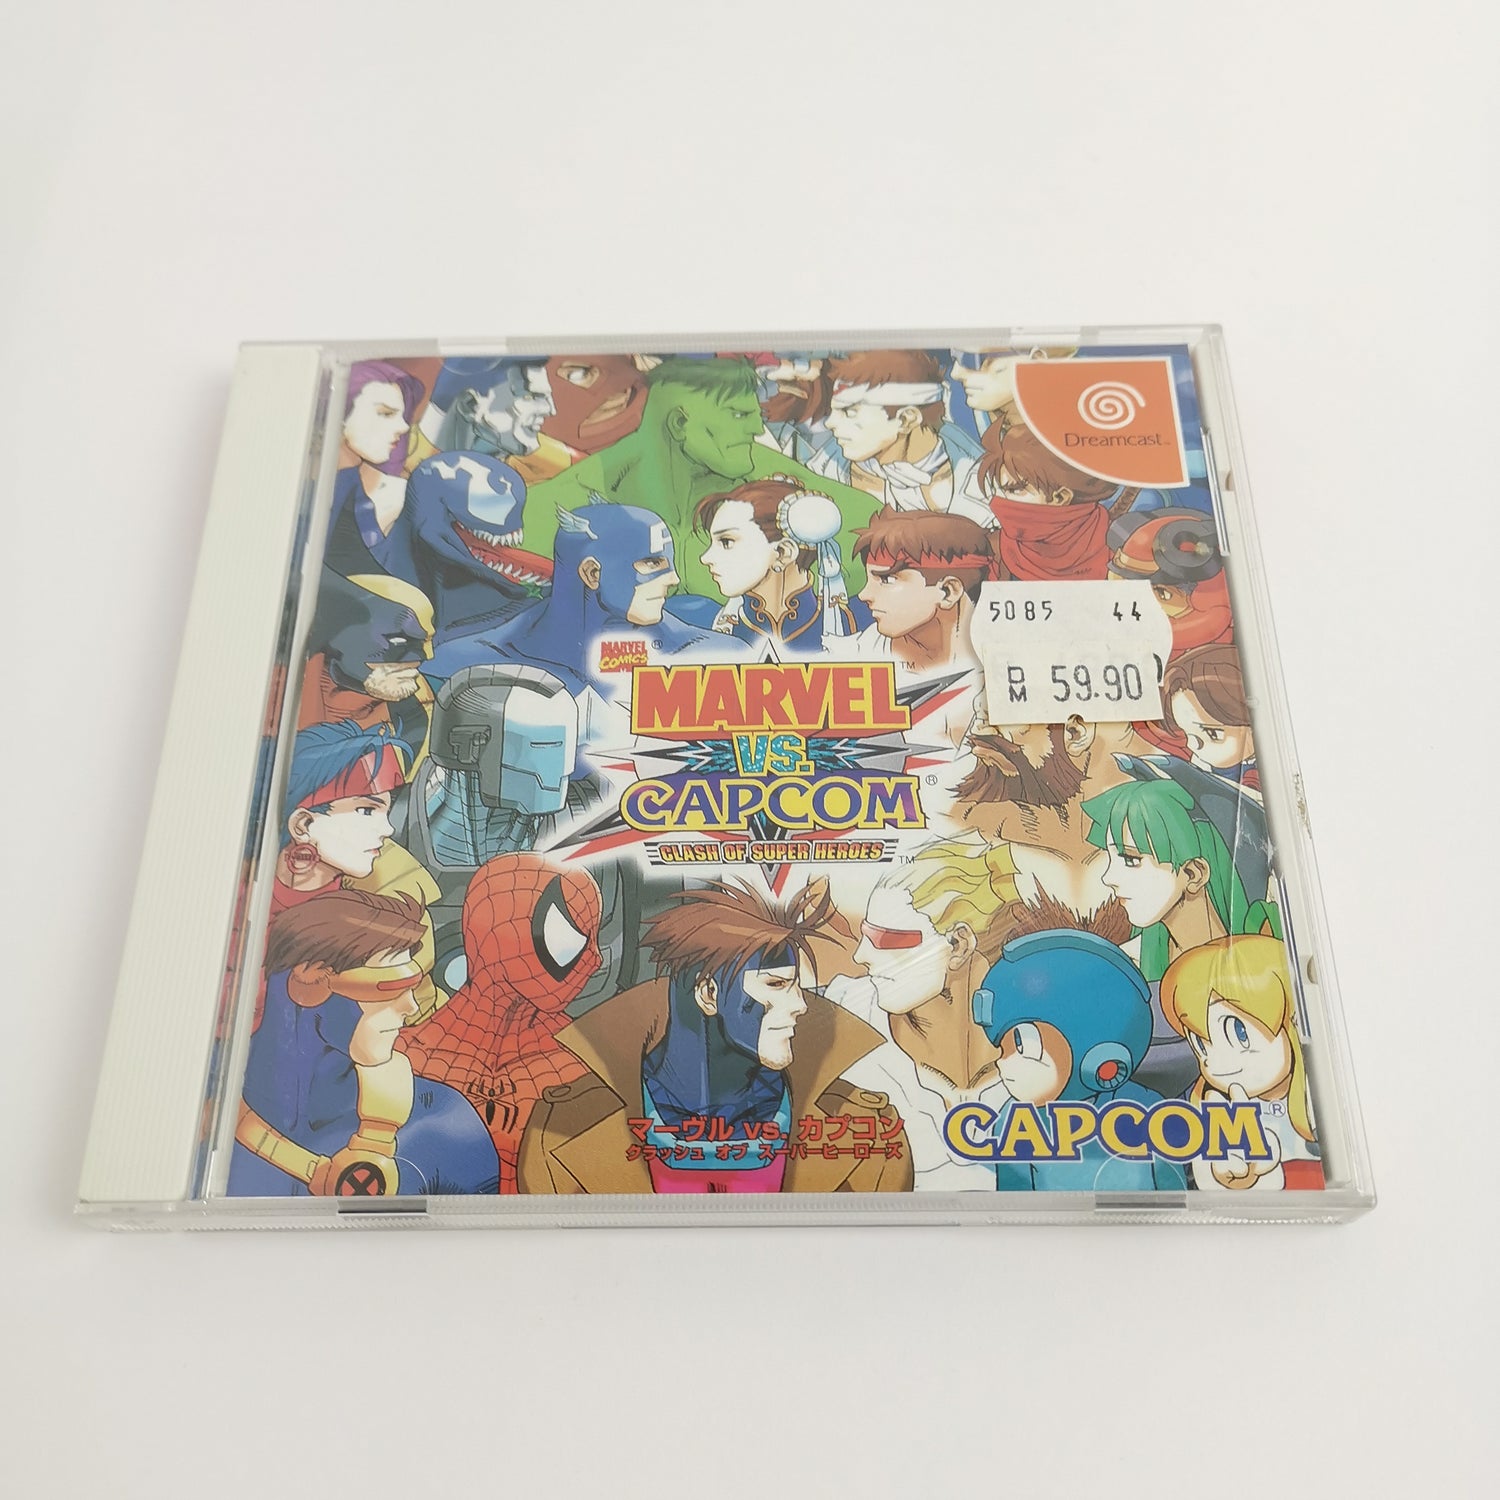 Japanese Sega Dreamcast game: Marvel vs. Capcom Clash of Super Heroes | Original packaging